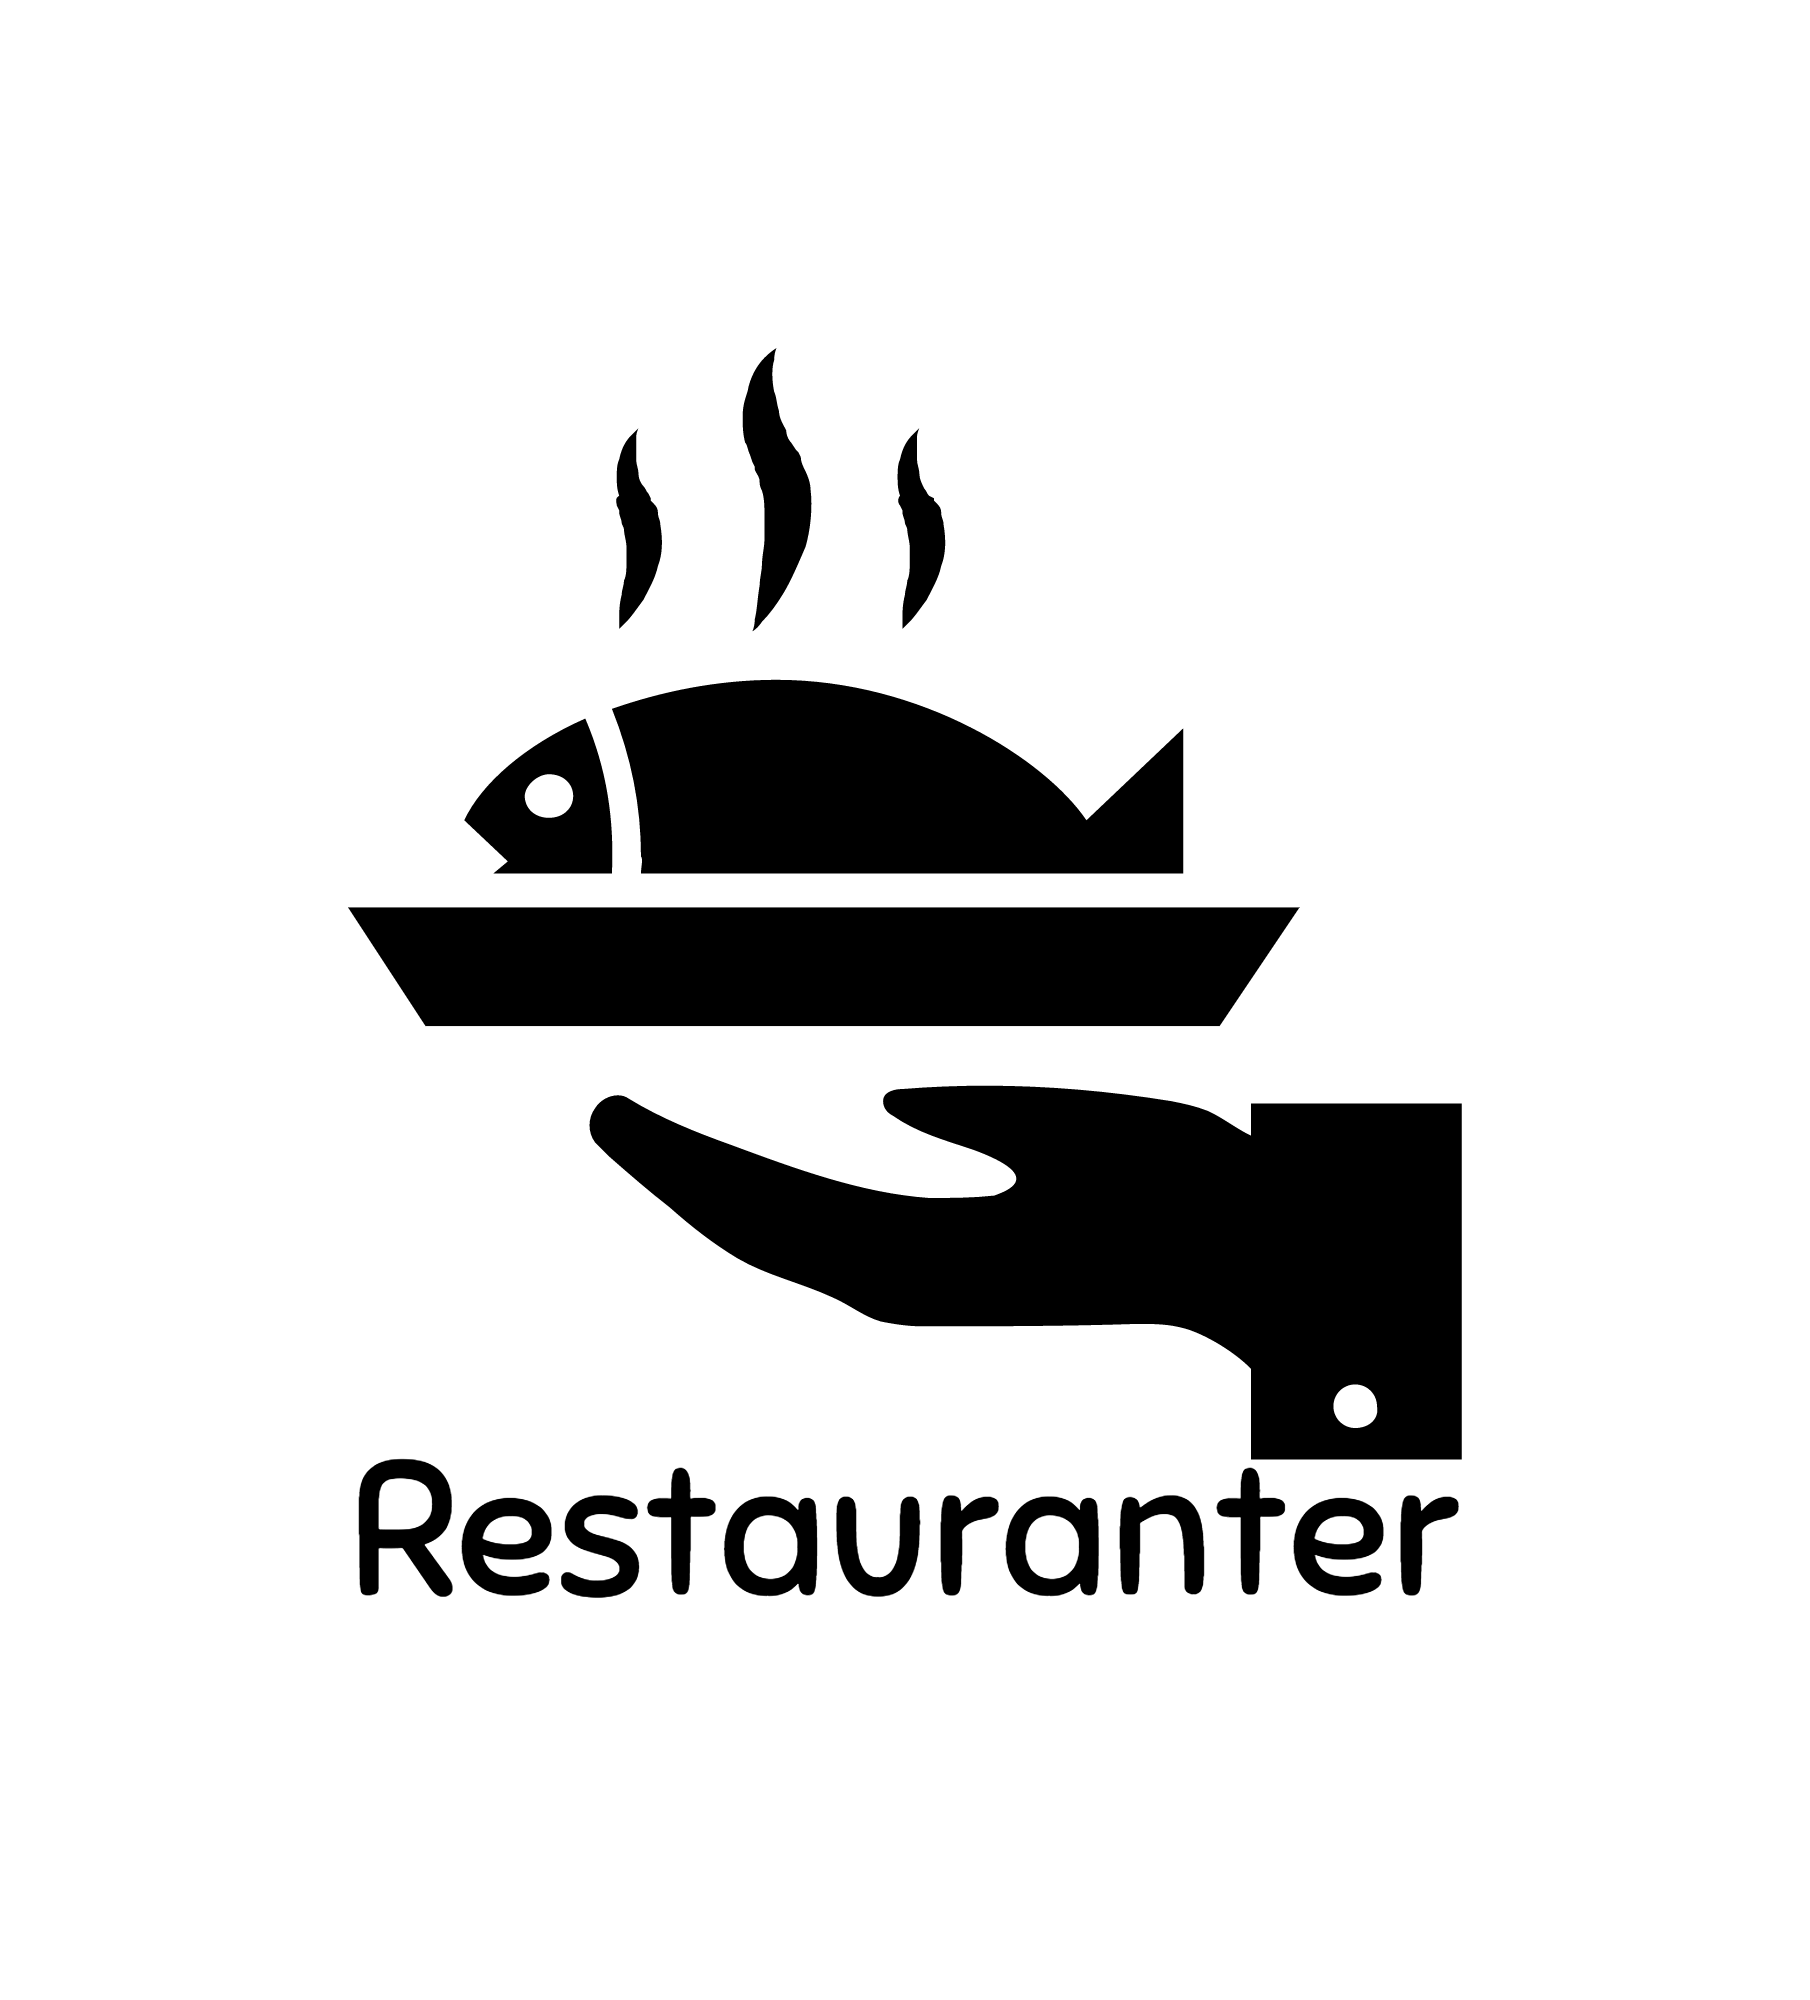 Restauranter-logo-black.png